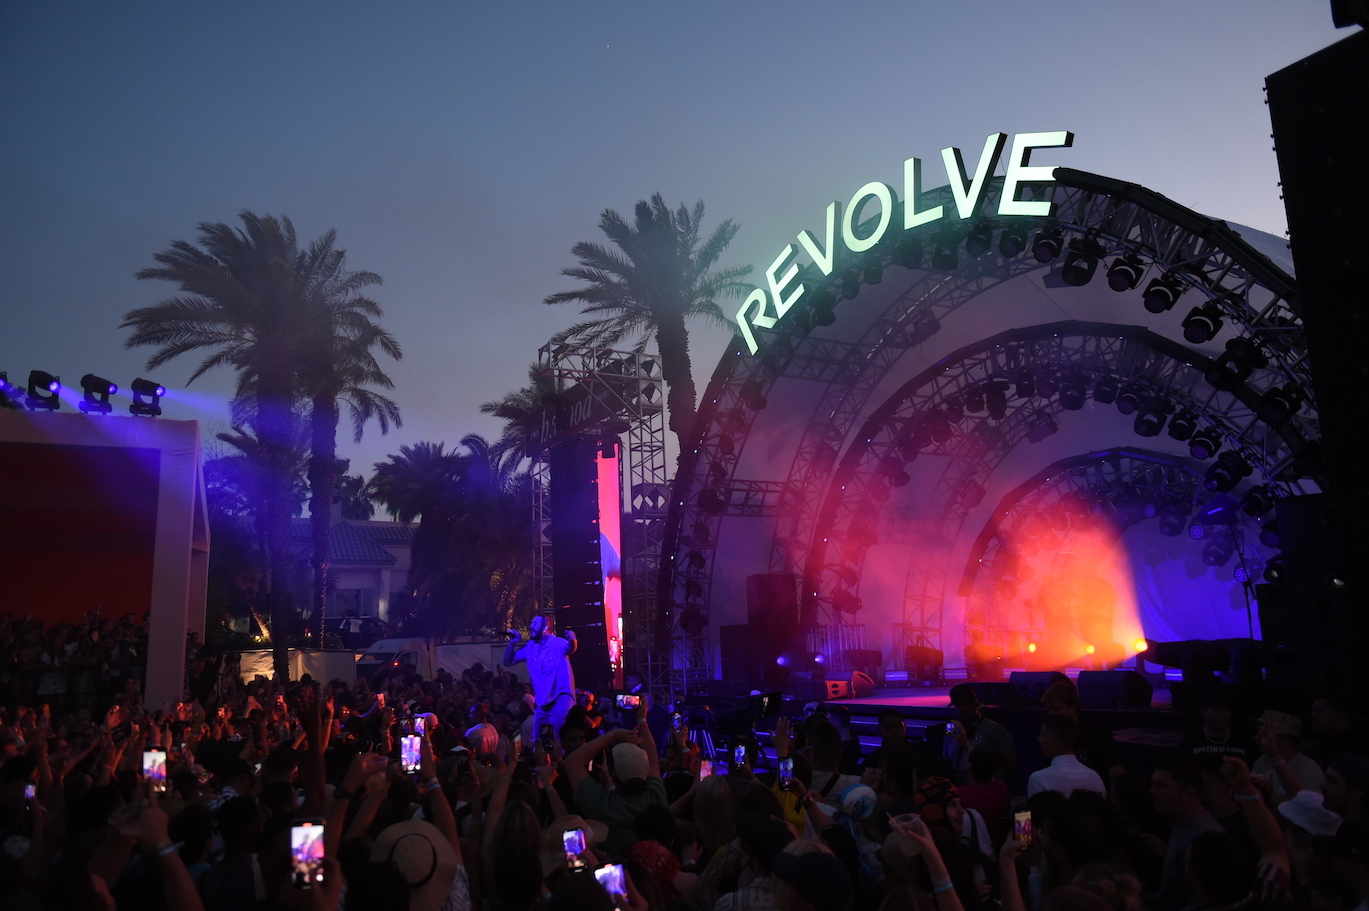 Revolve Festival Is Coachella's Most Lavish Party. It Wants to Get